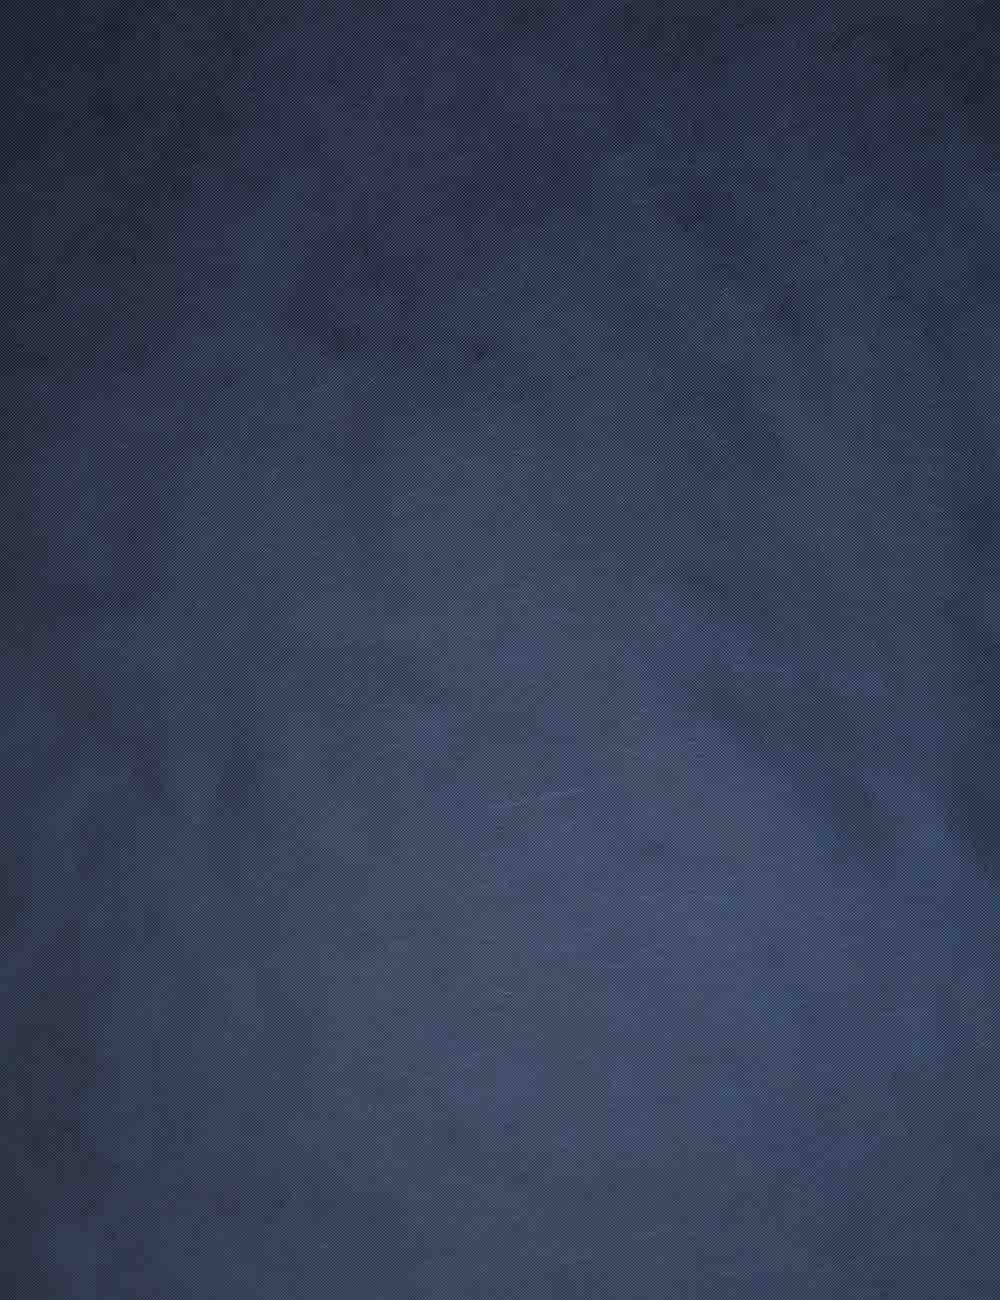 Nearly Solid Texture Deep Blue Olipant Backdrop For Photo Studio Shopbackdrop